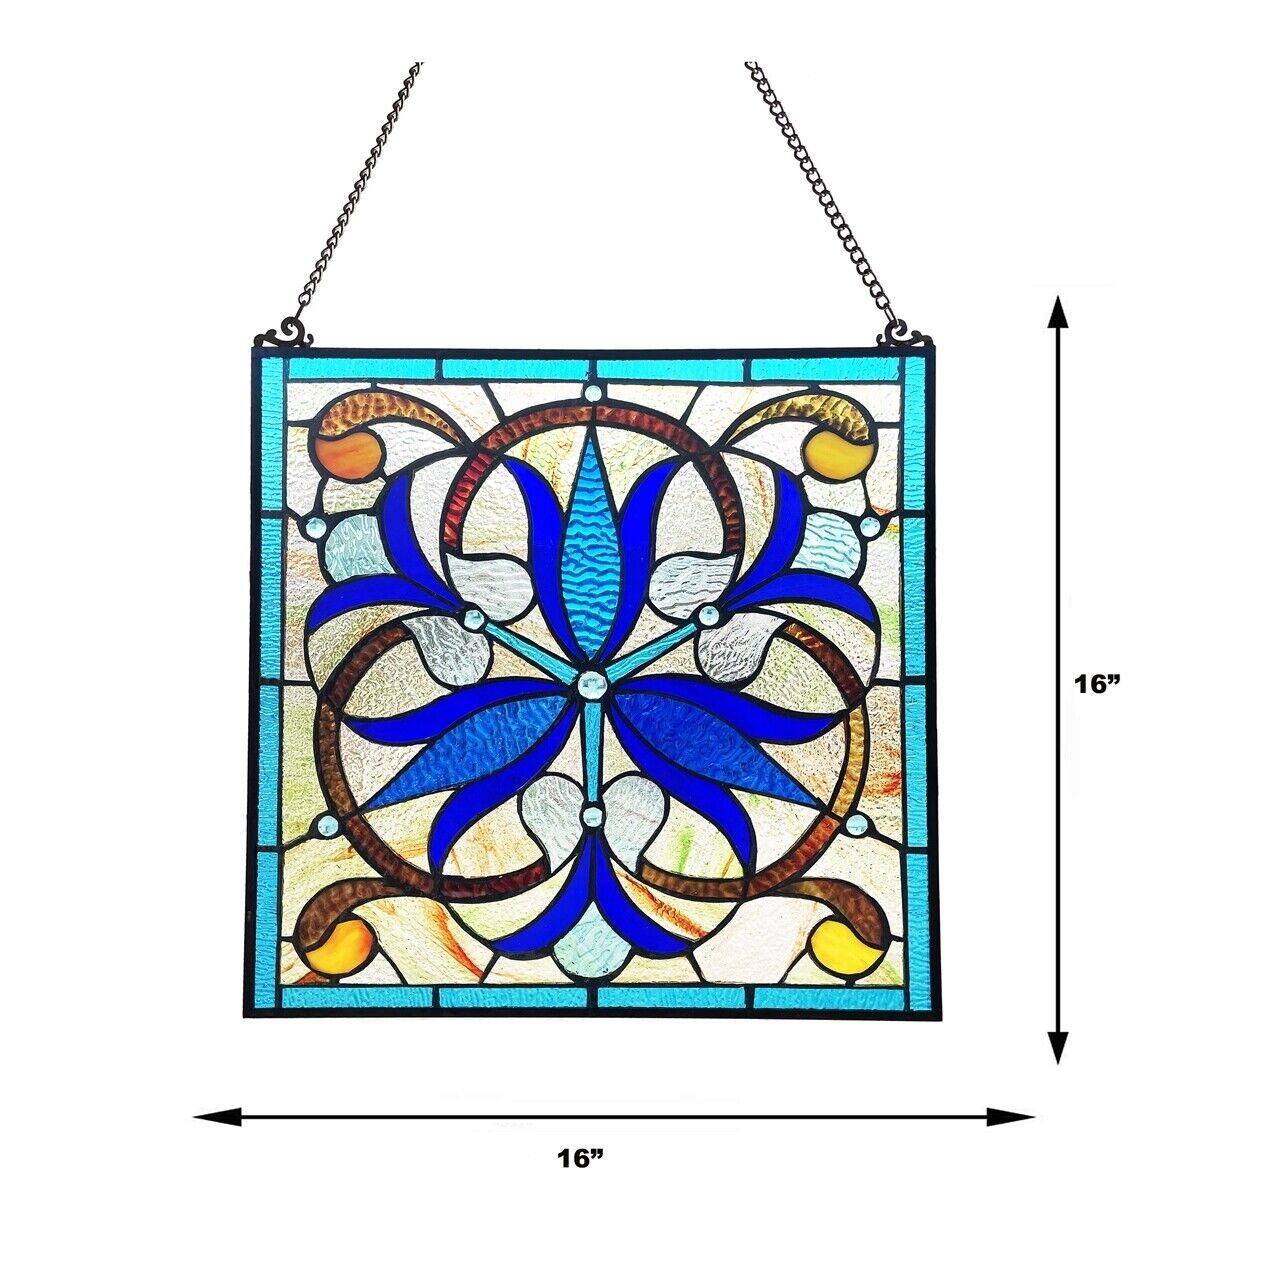 16" Stained Glass Hanging Window Pane Panel Suncatcher